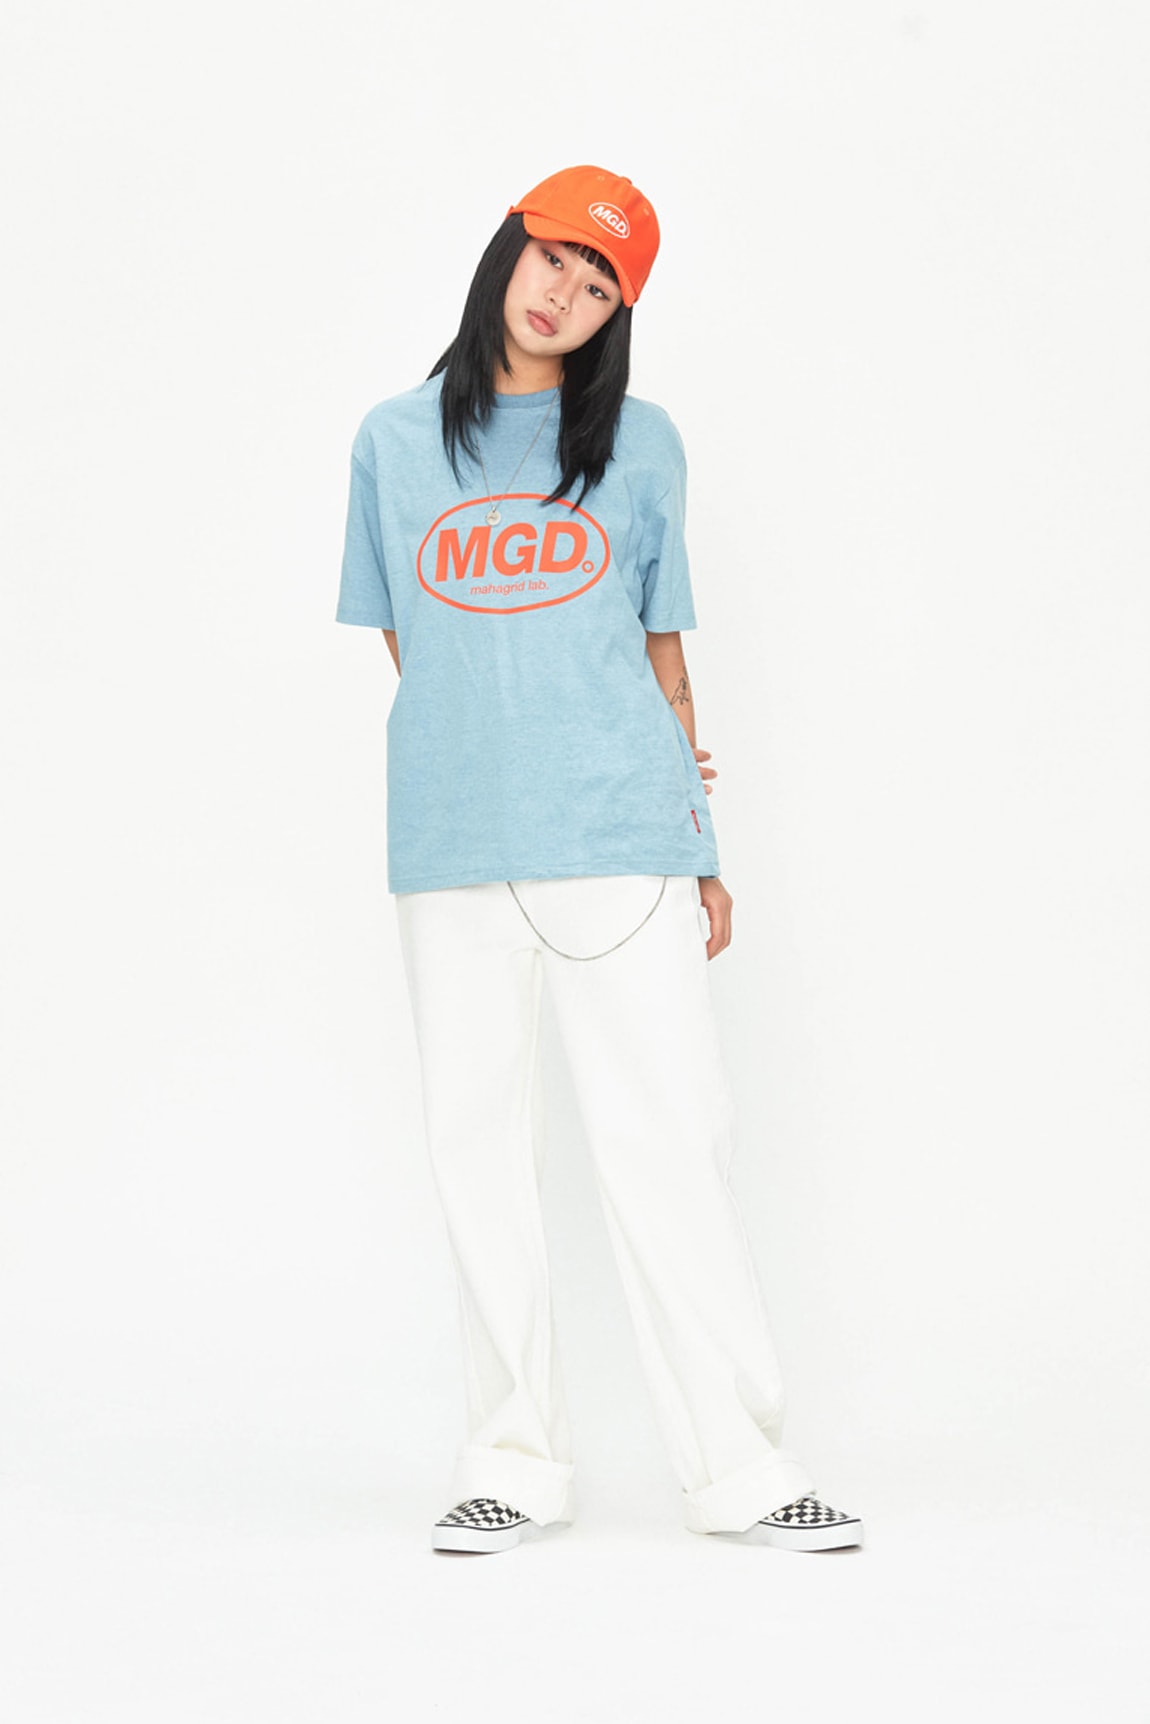 Mahagrid Spring Summer 2019 Women's Collection Shirt Blue Pants White Hat Orange